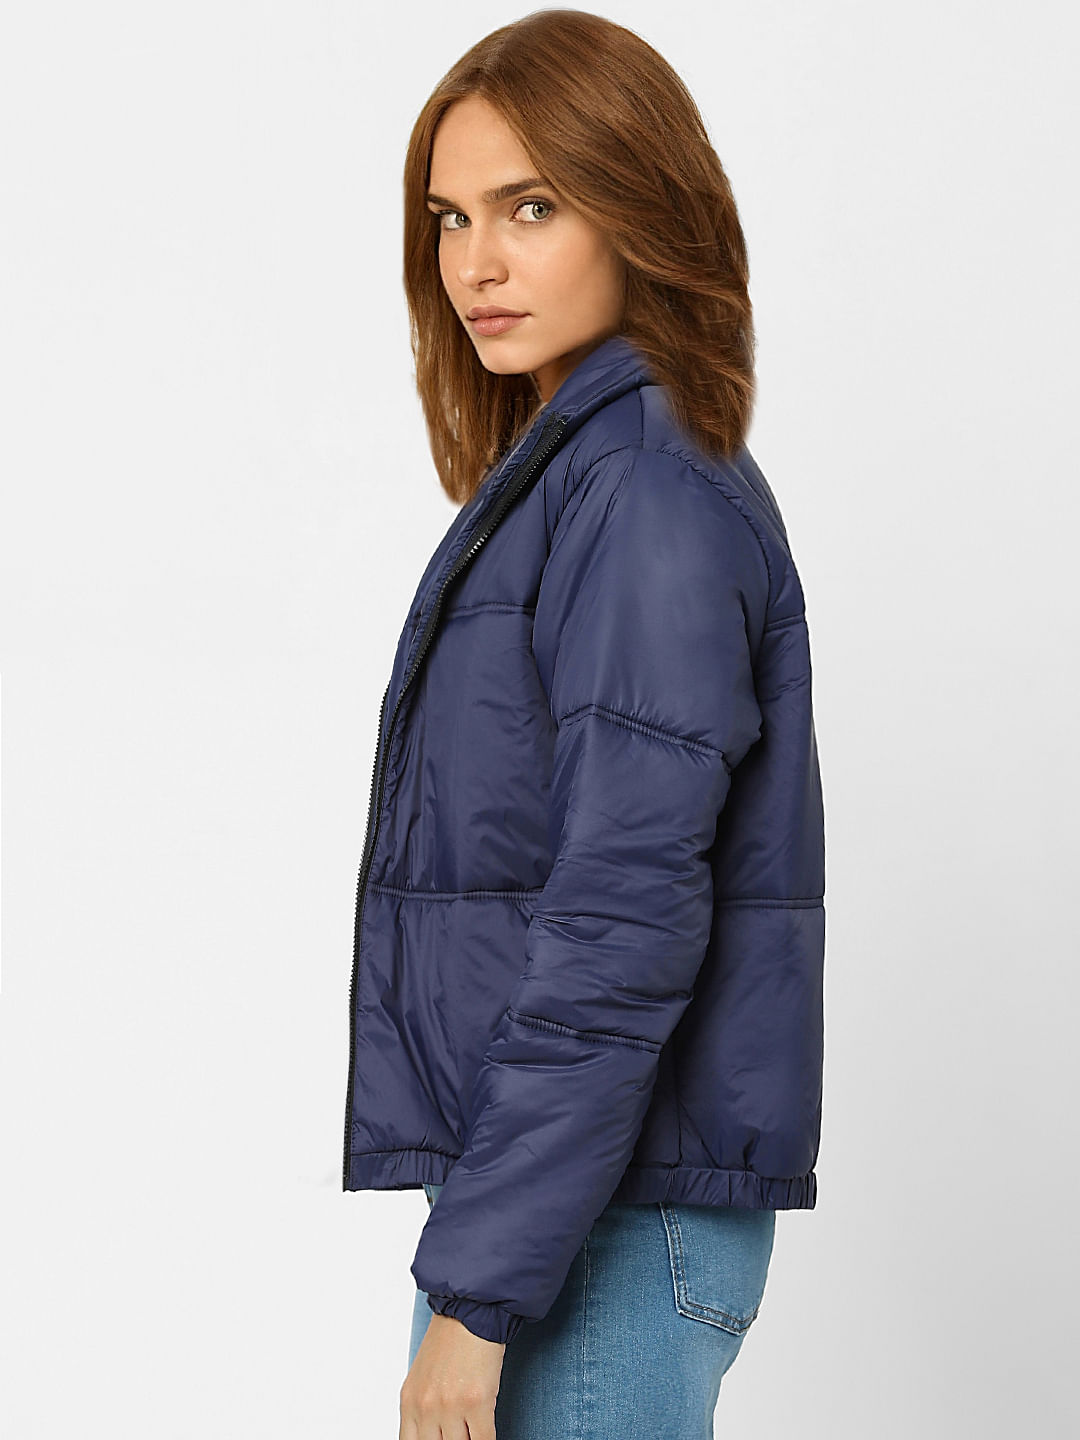 WOMEN FASHION Jackets Jacket Sports Navy Blue 42                  EU discount 66% Pennyblack jacket 